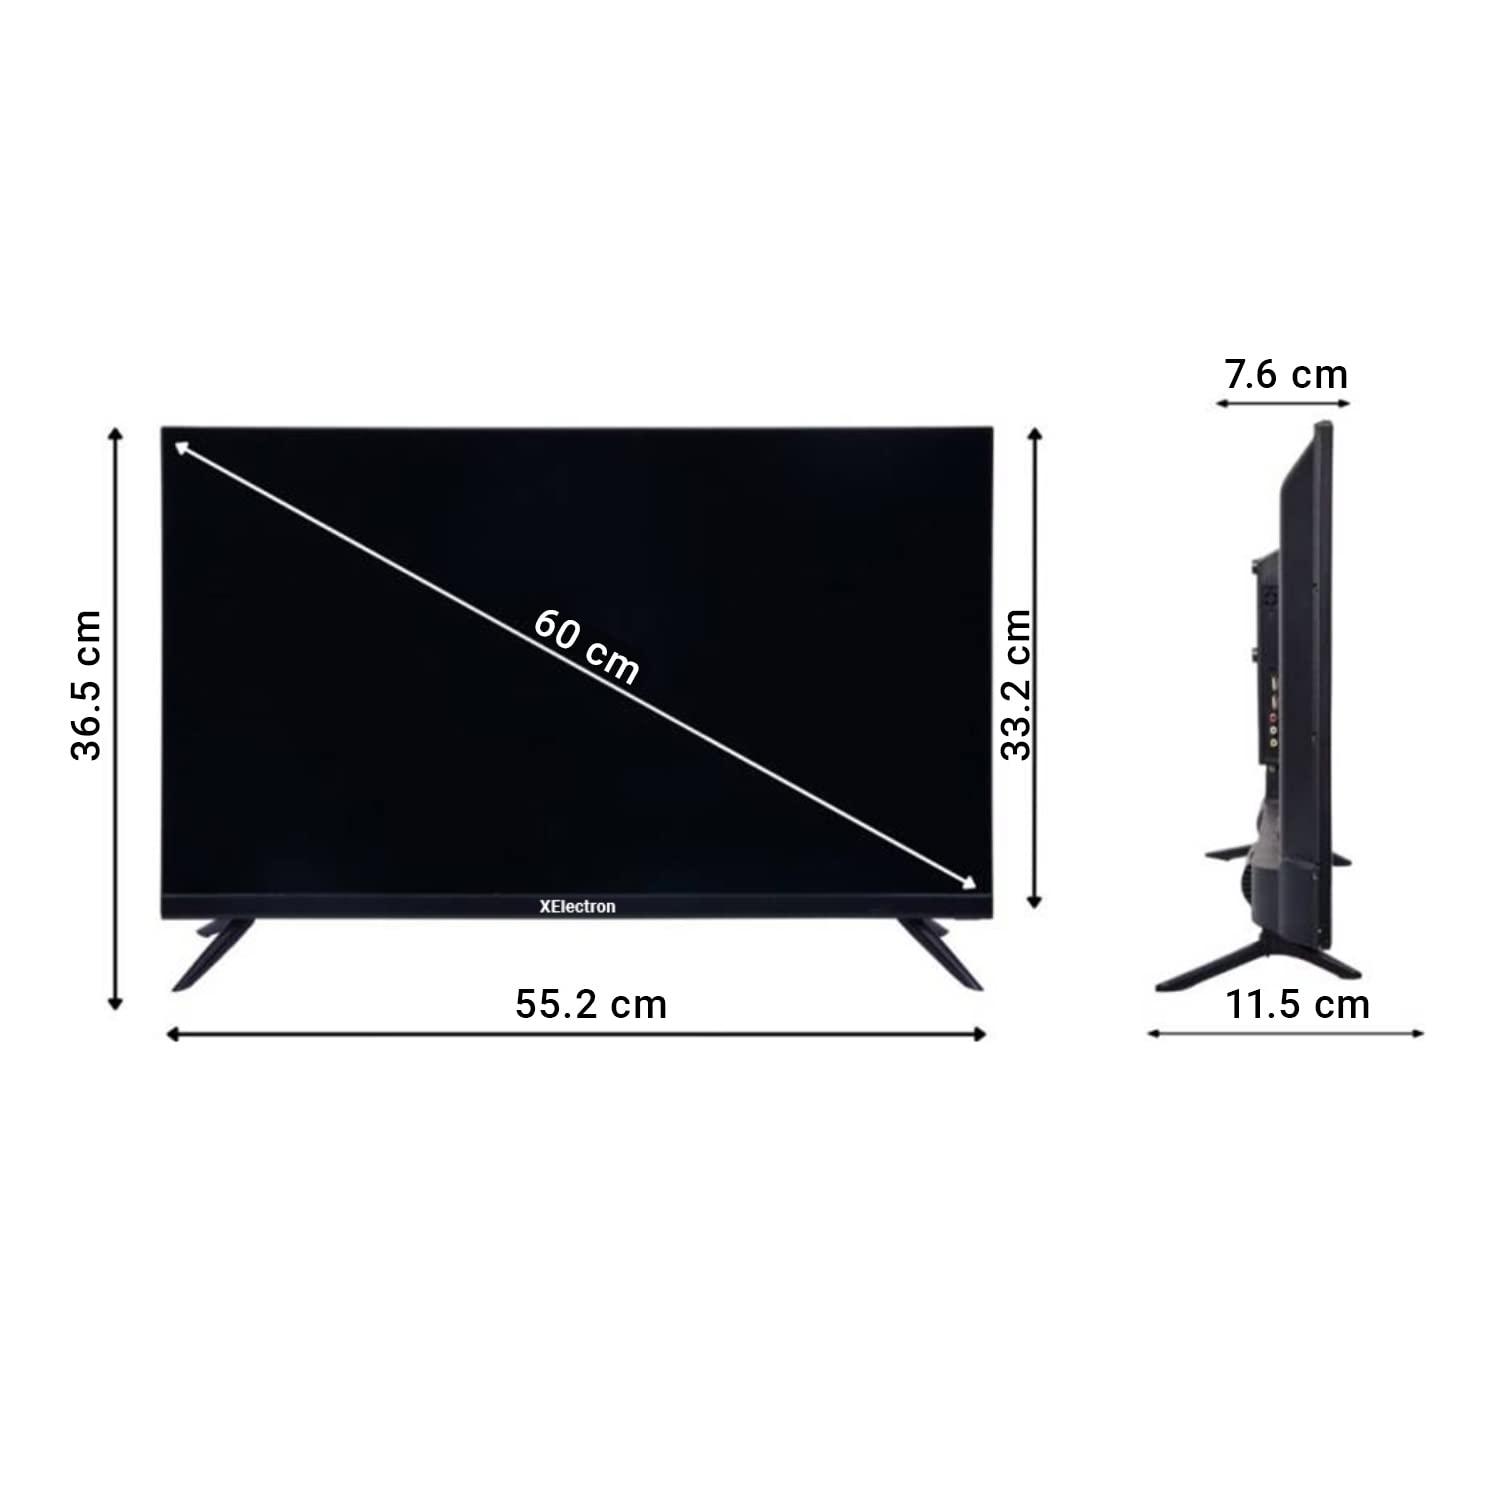 XElectron 24 inch (60 cm) LED TV with Bezel-Less Design - XElectron